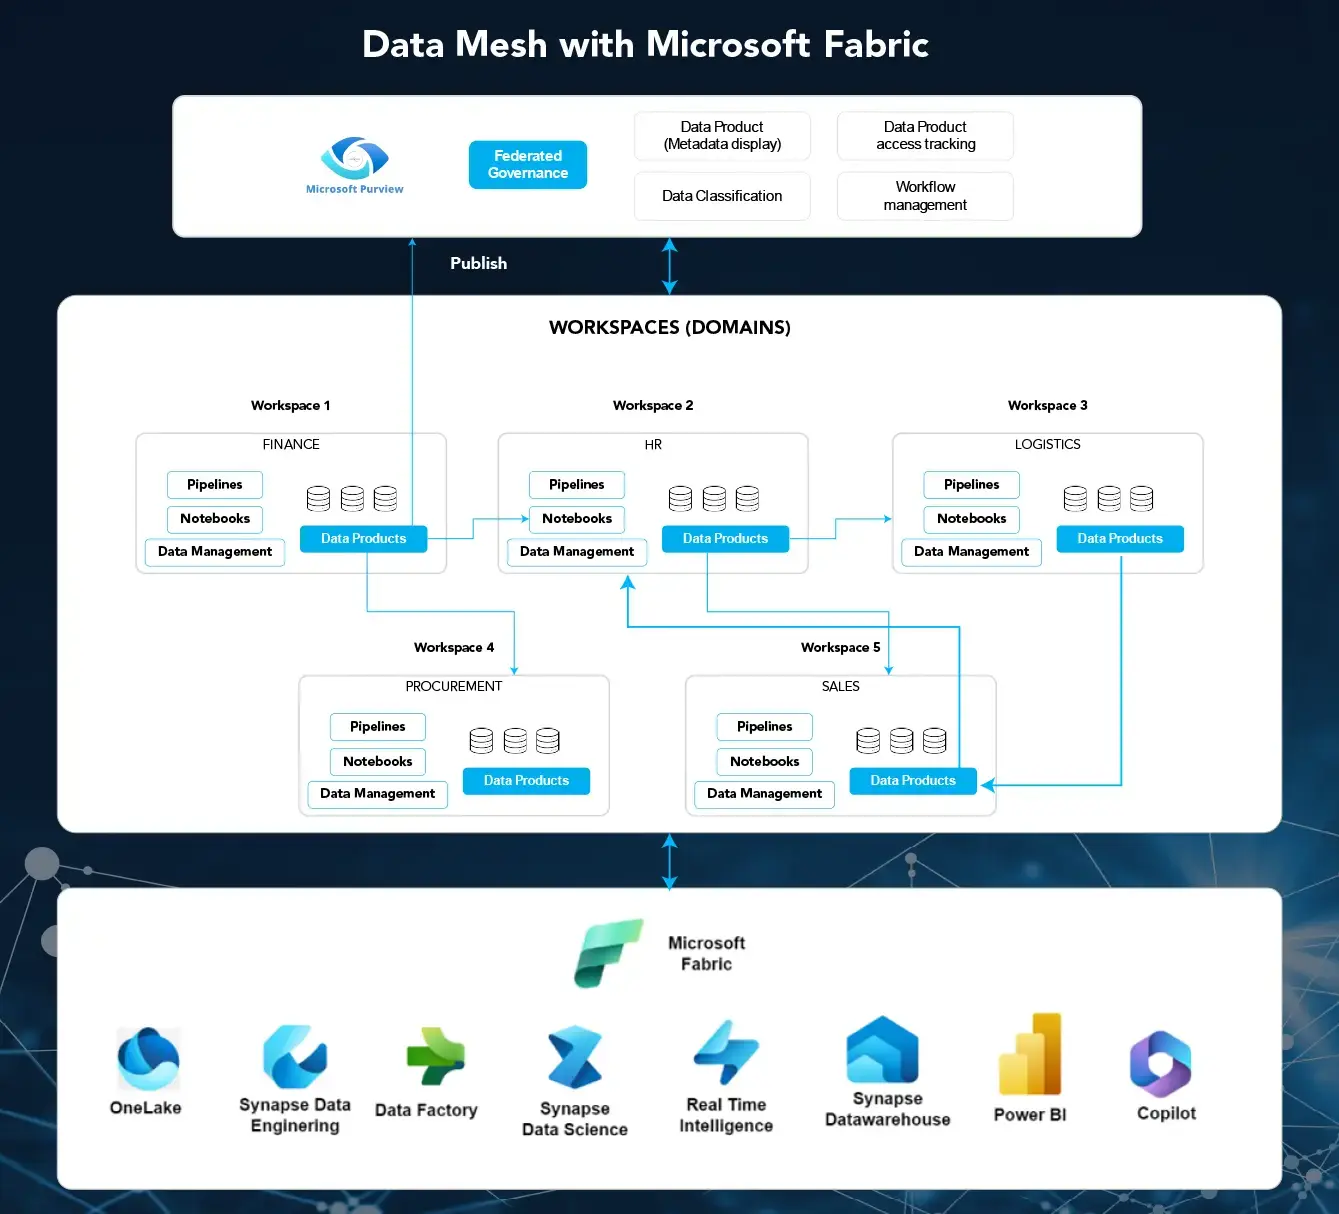 Data Mesh with Microsoft Fabric